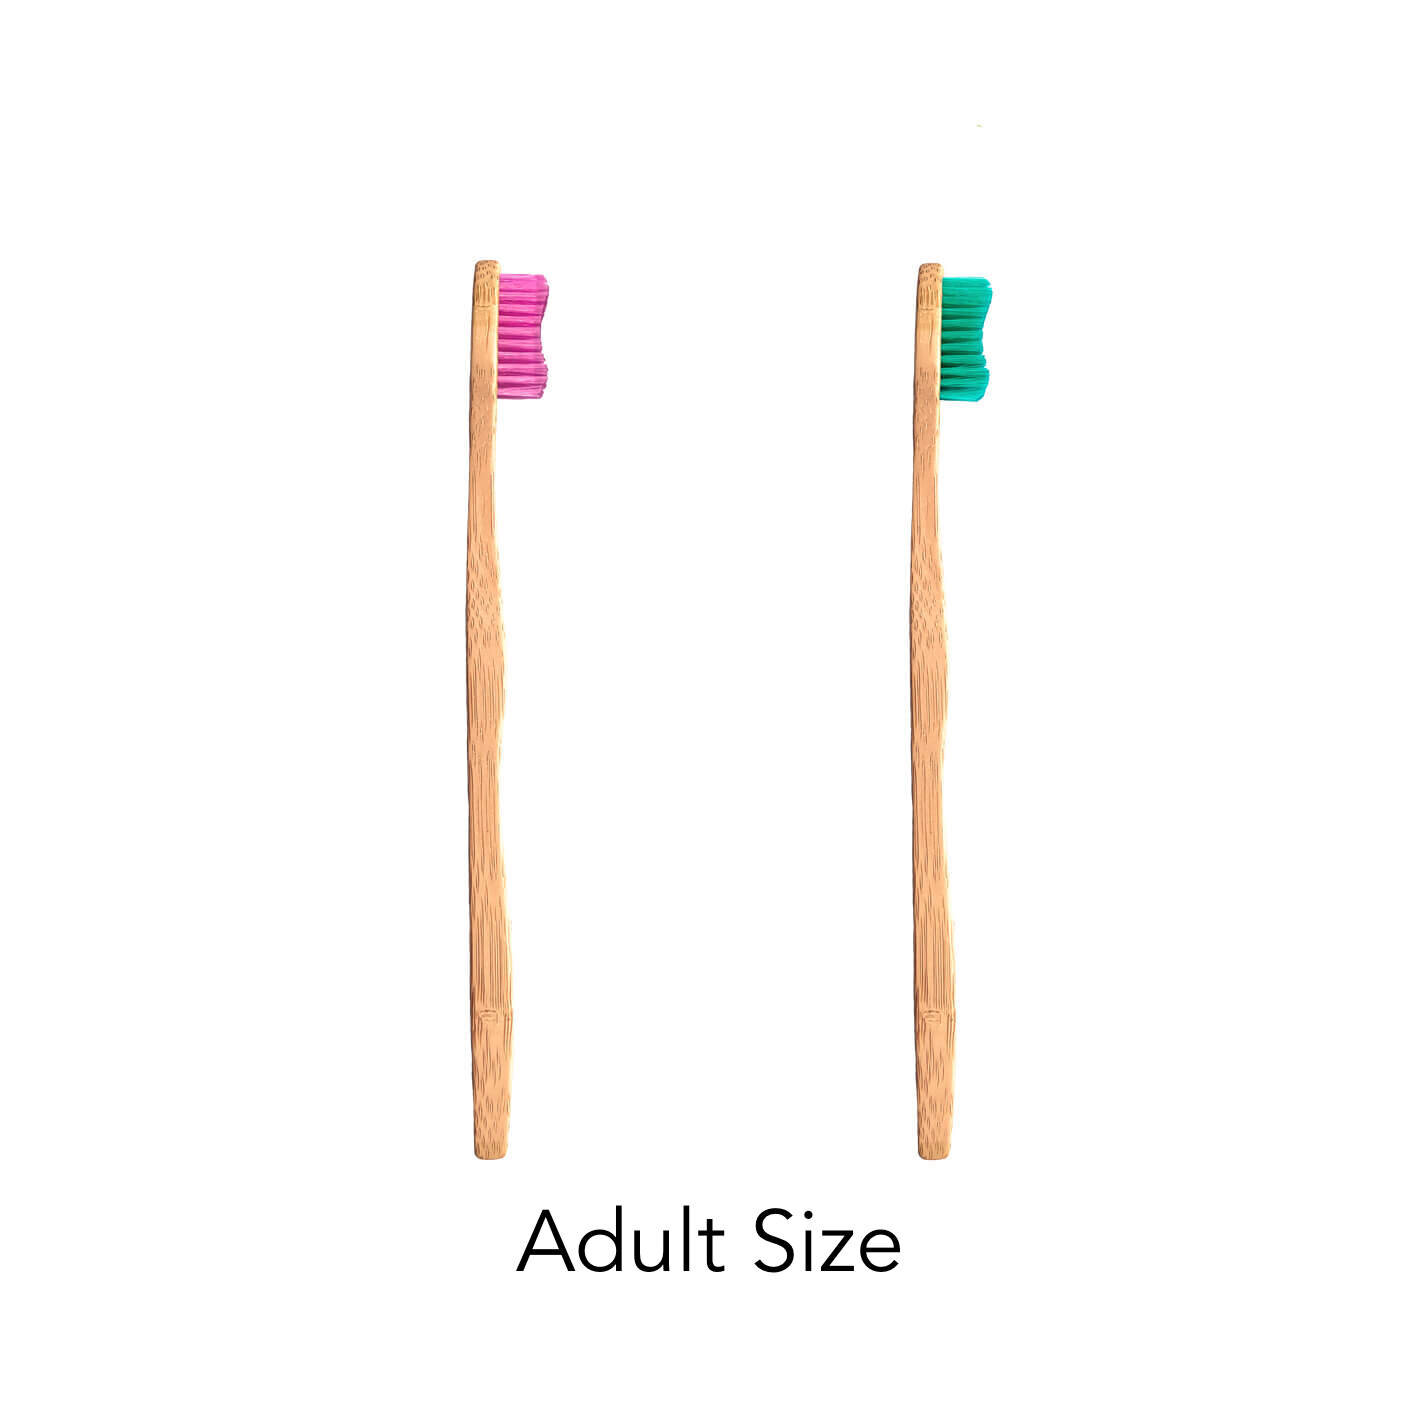 Bamkiki adult size biodegradable eco friendly bamboo toothbrush subscription Kai and Roxo.jpg